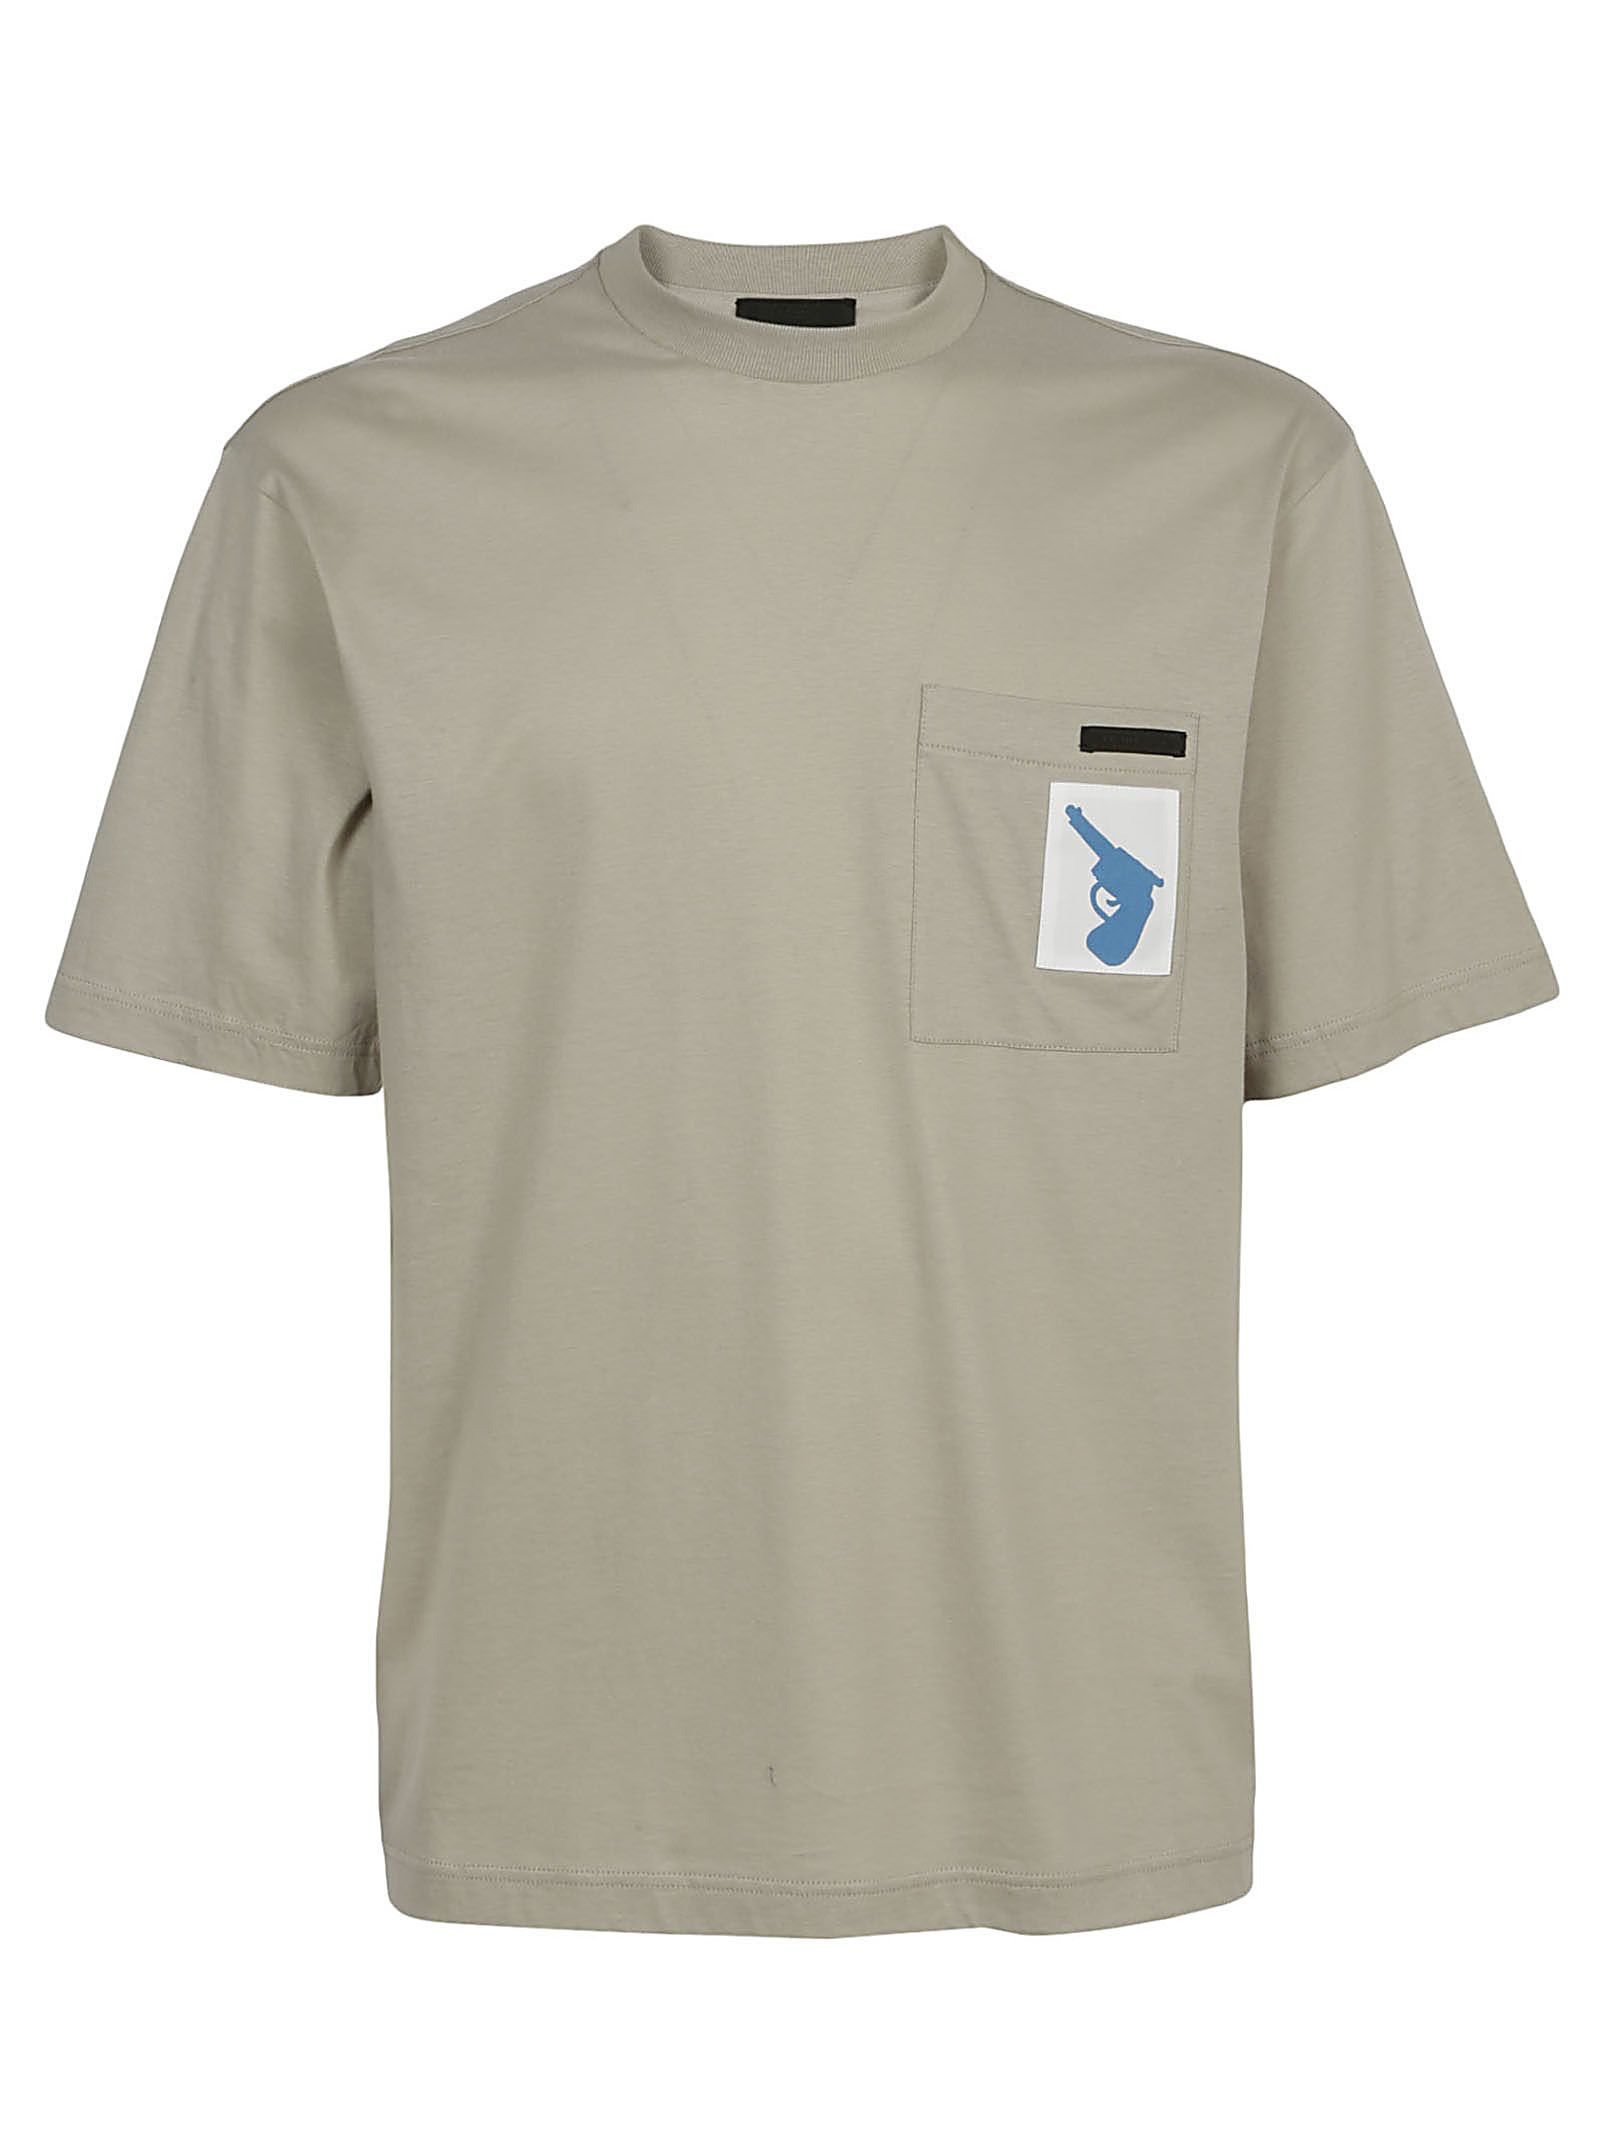 Prada T Shirt Mens Toffee Art - roblox shirts tops boys tee poshmark